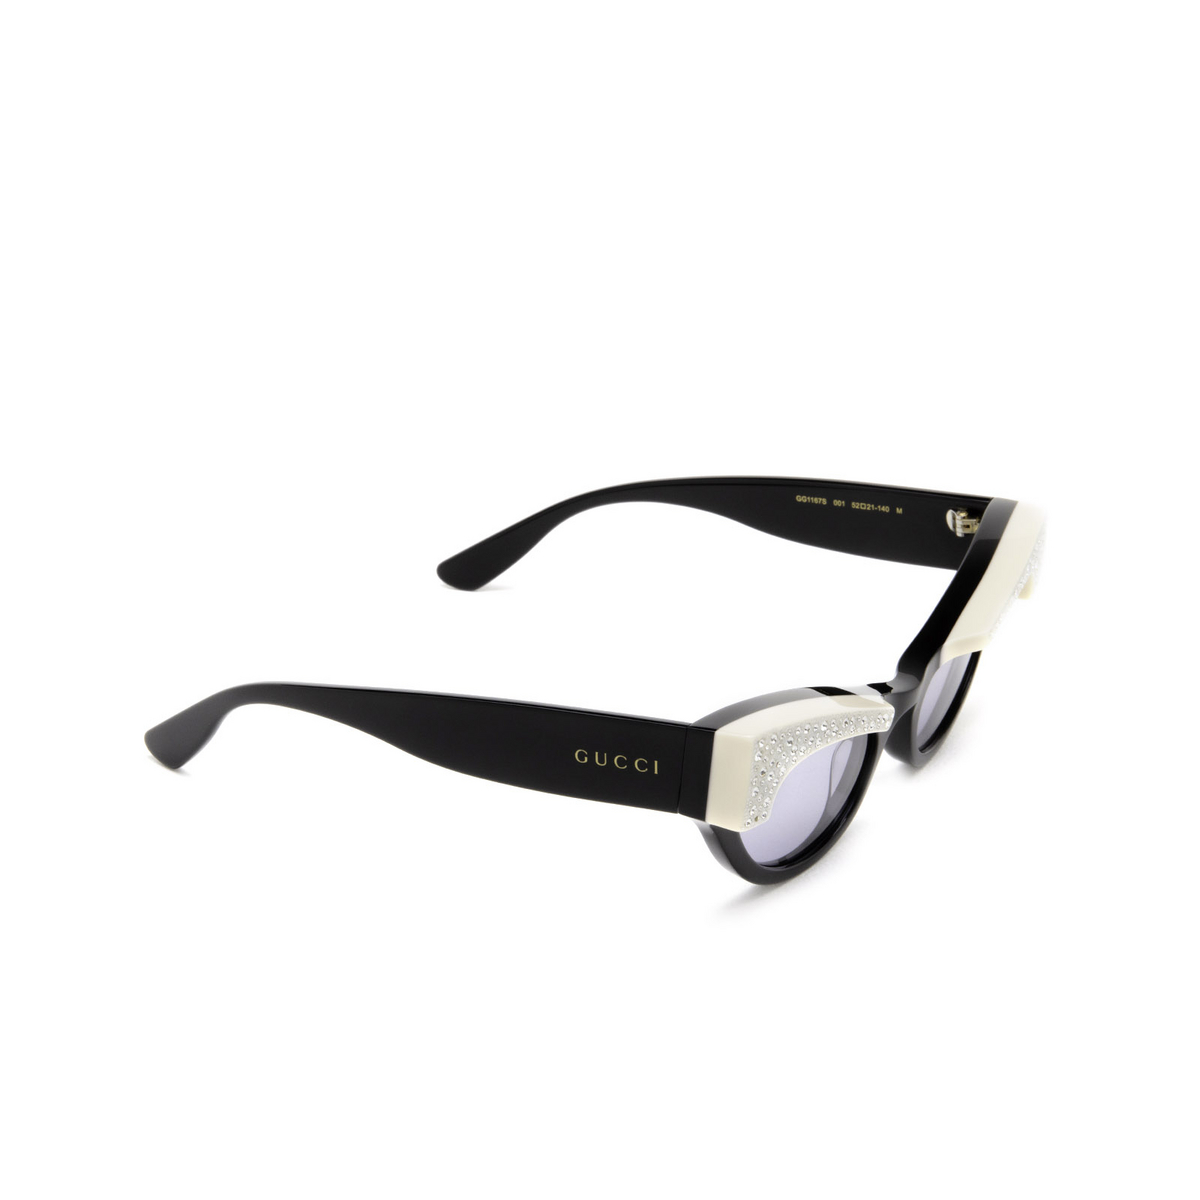 Gucci® Cat-eye Sunglasses: GG1167S color Black 001 - three-quarters view.